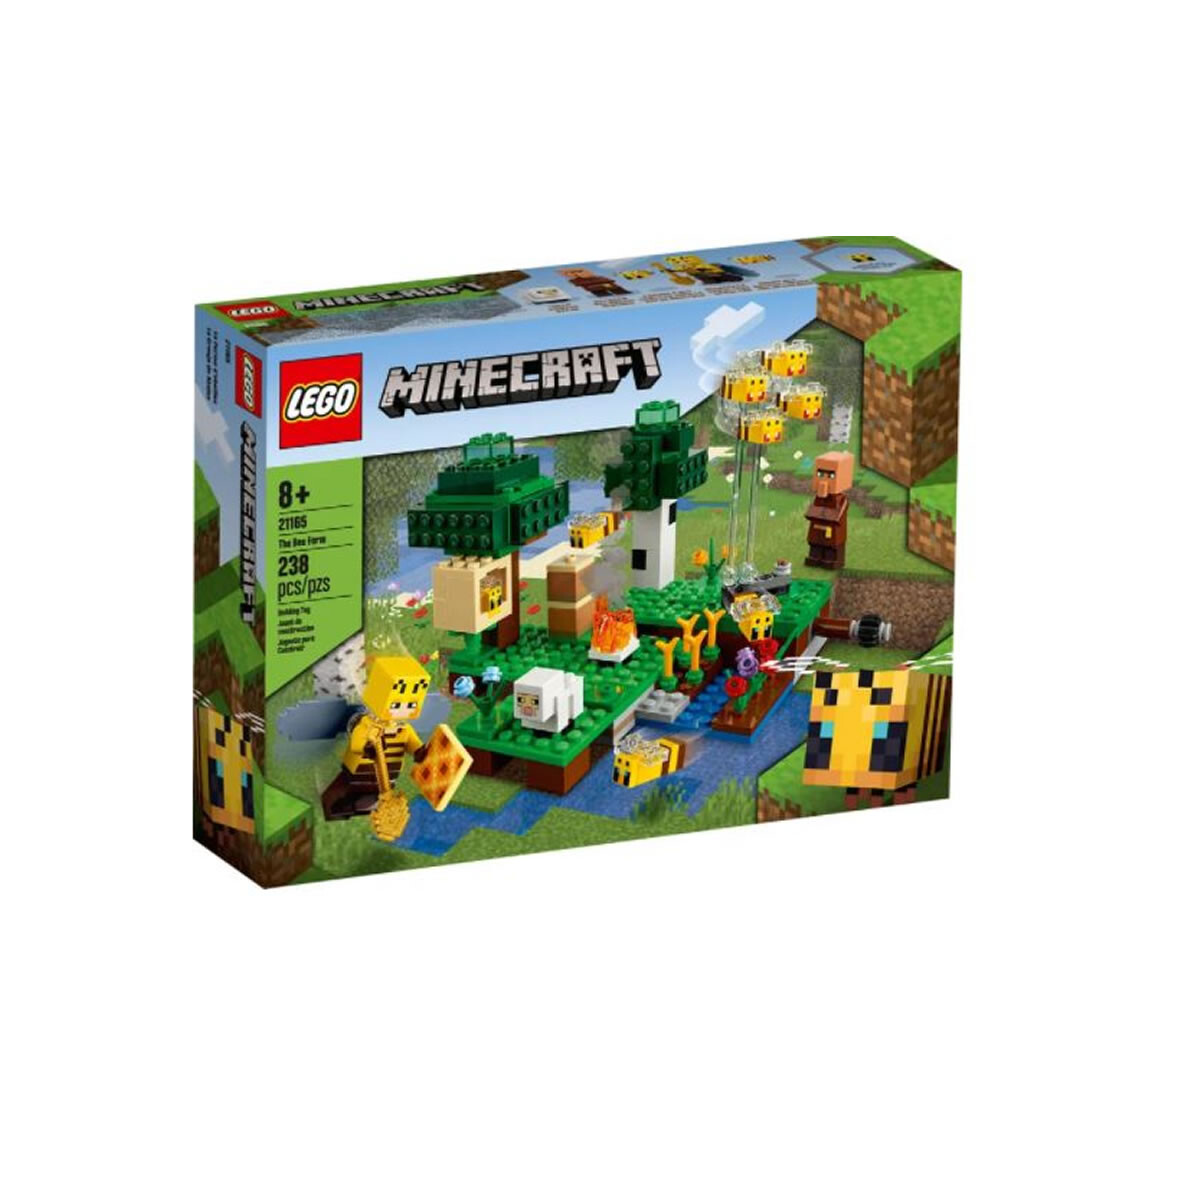 LEGO MINECRAFT Granja De Abejas 238 Pzs 